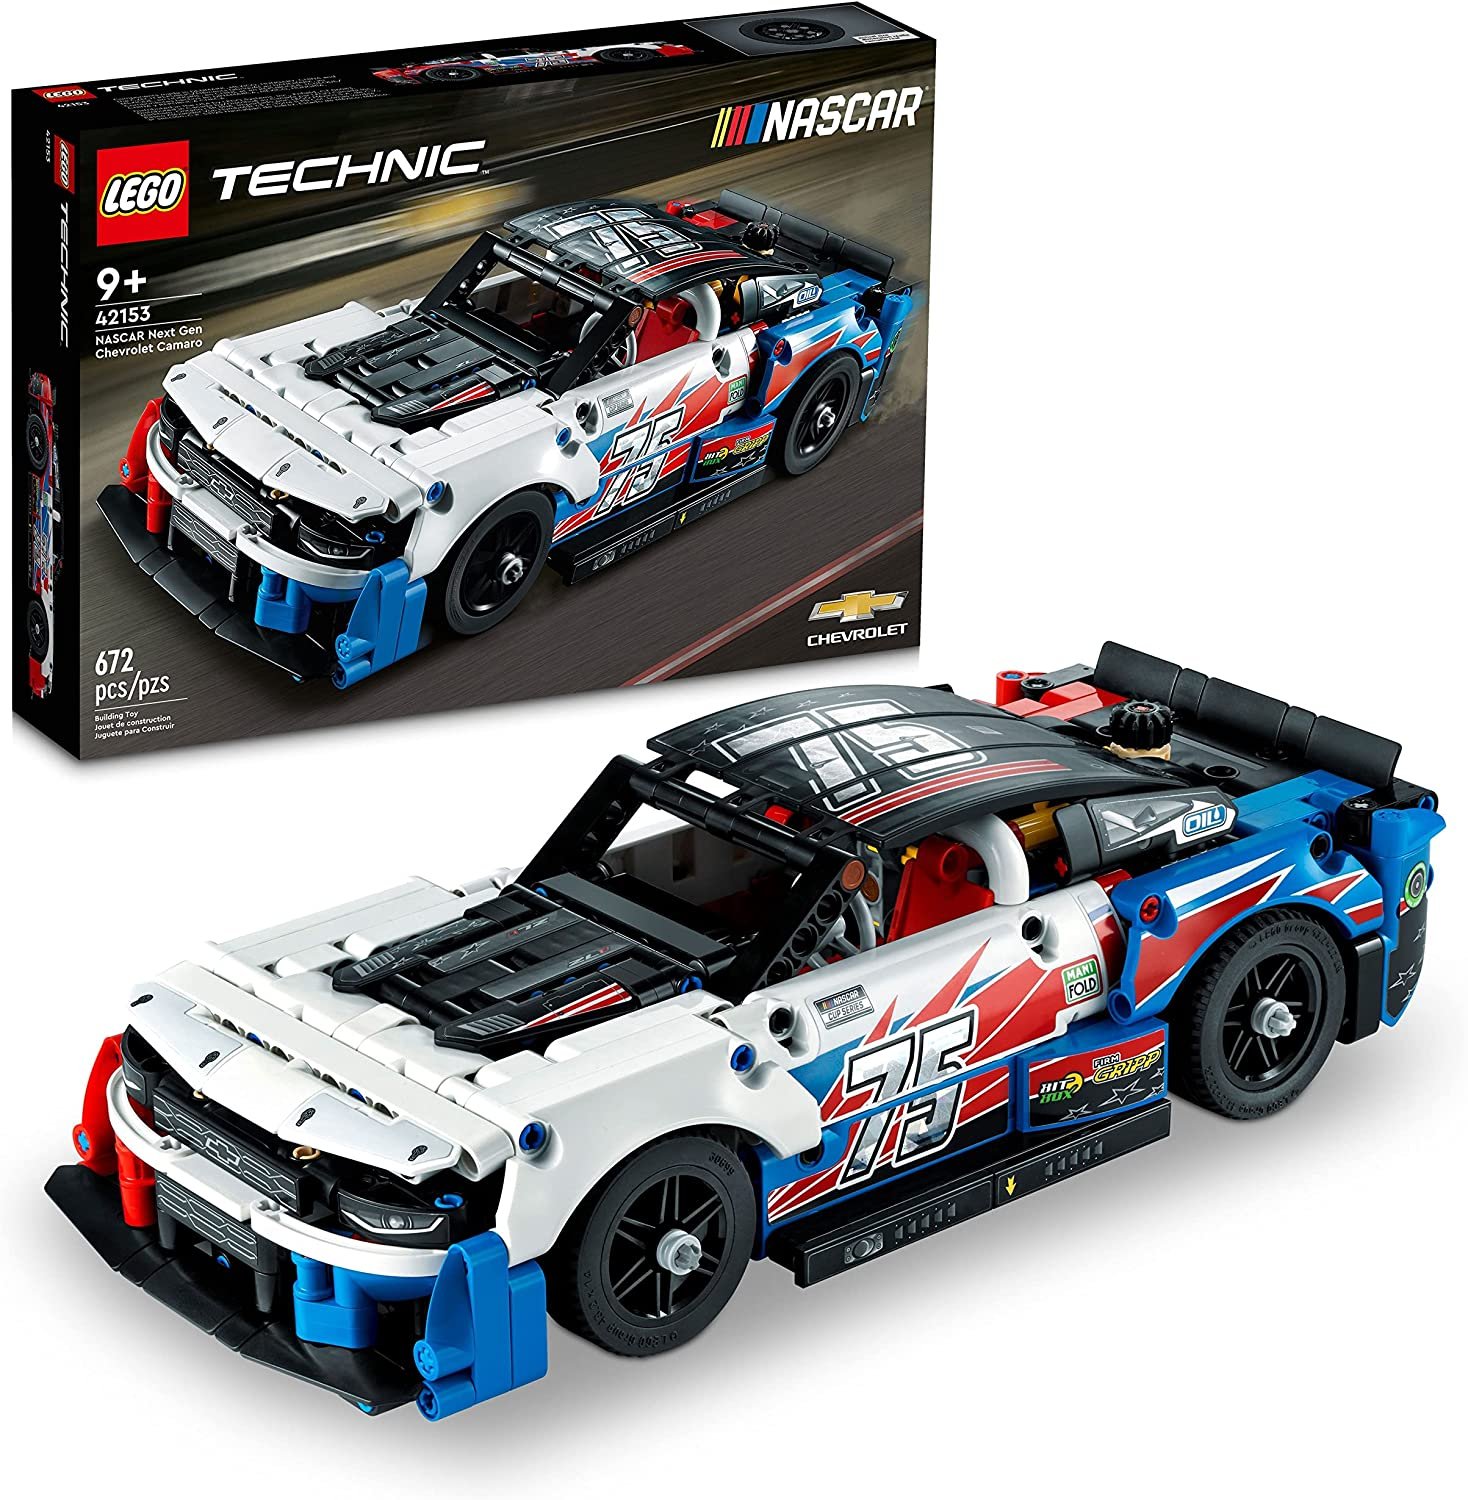 LEGO Technic NASCAR Next Gen Chevrolet Camaro ZL1 Building Kit 42153